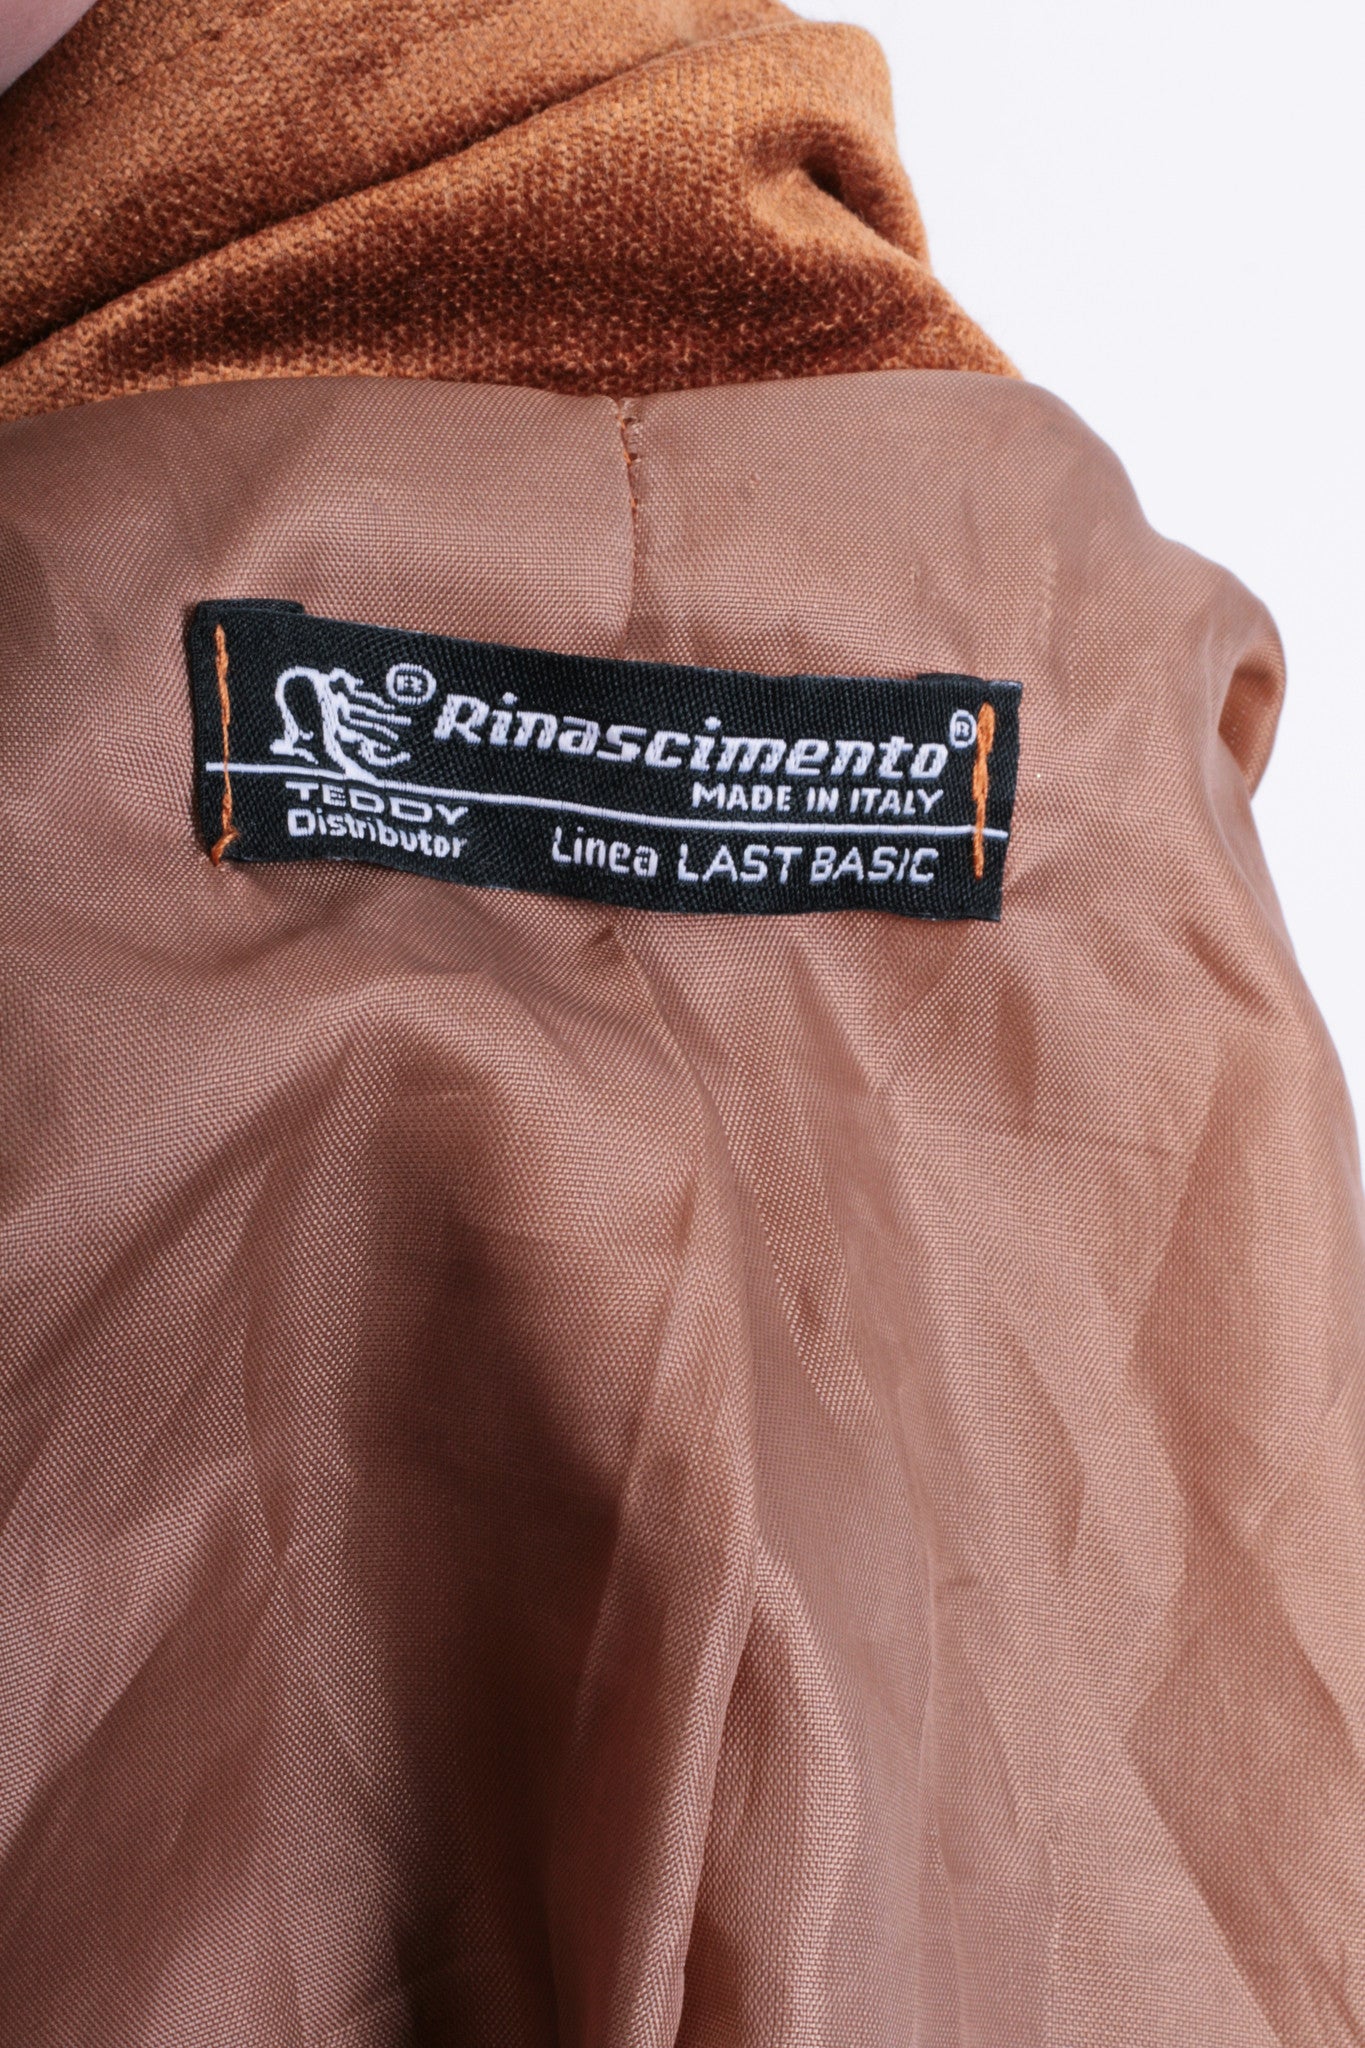 Rinascimento Womens S Blazer Shiny Brown Cotton Italy Top Suit - RetrospectClothes